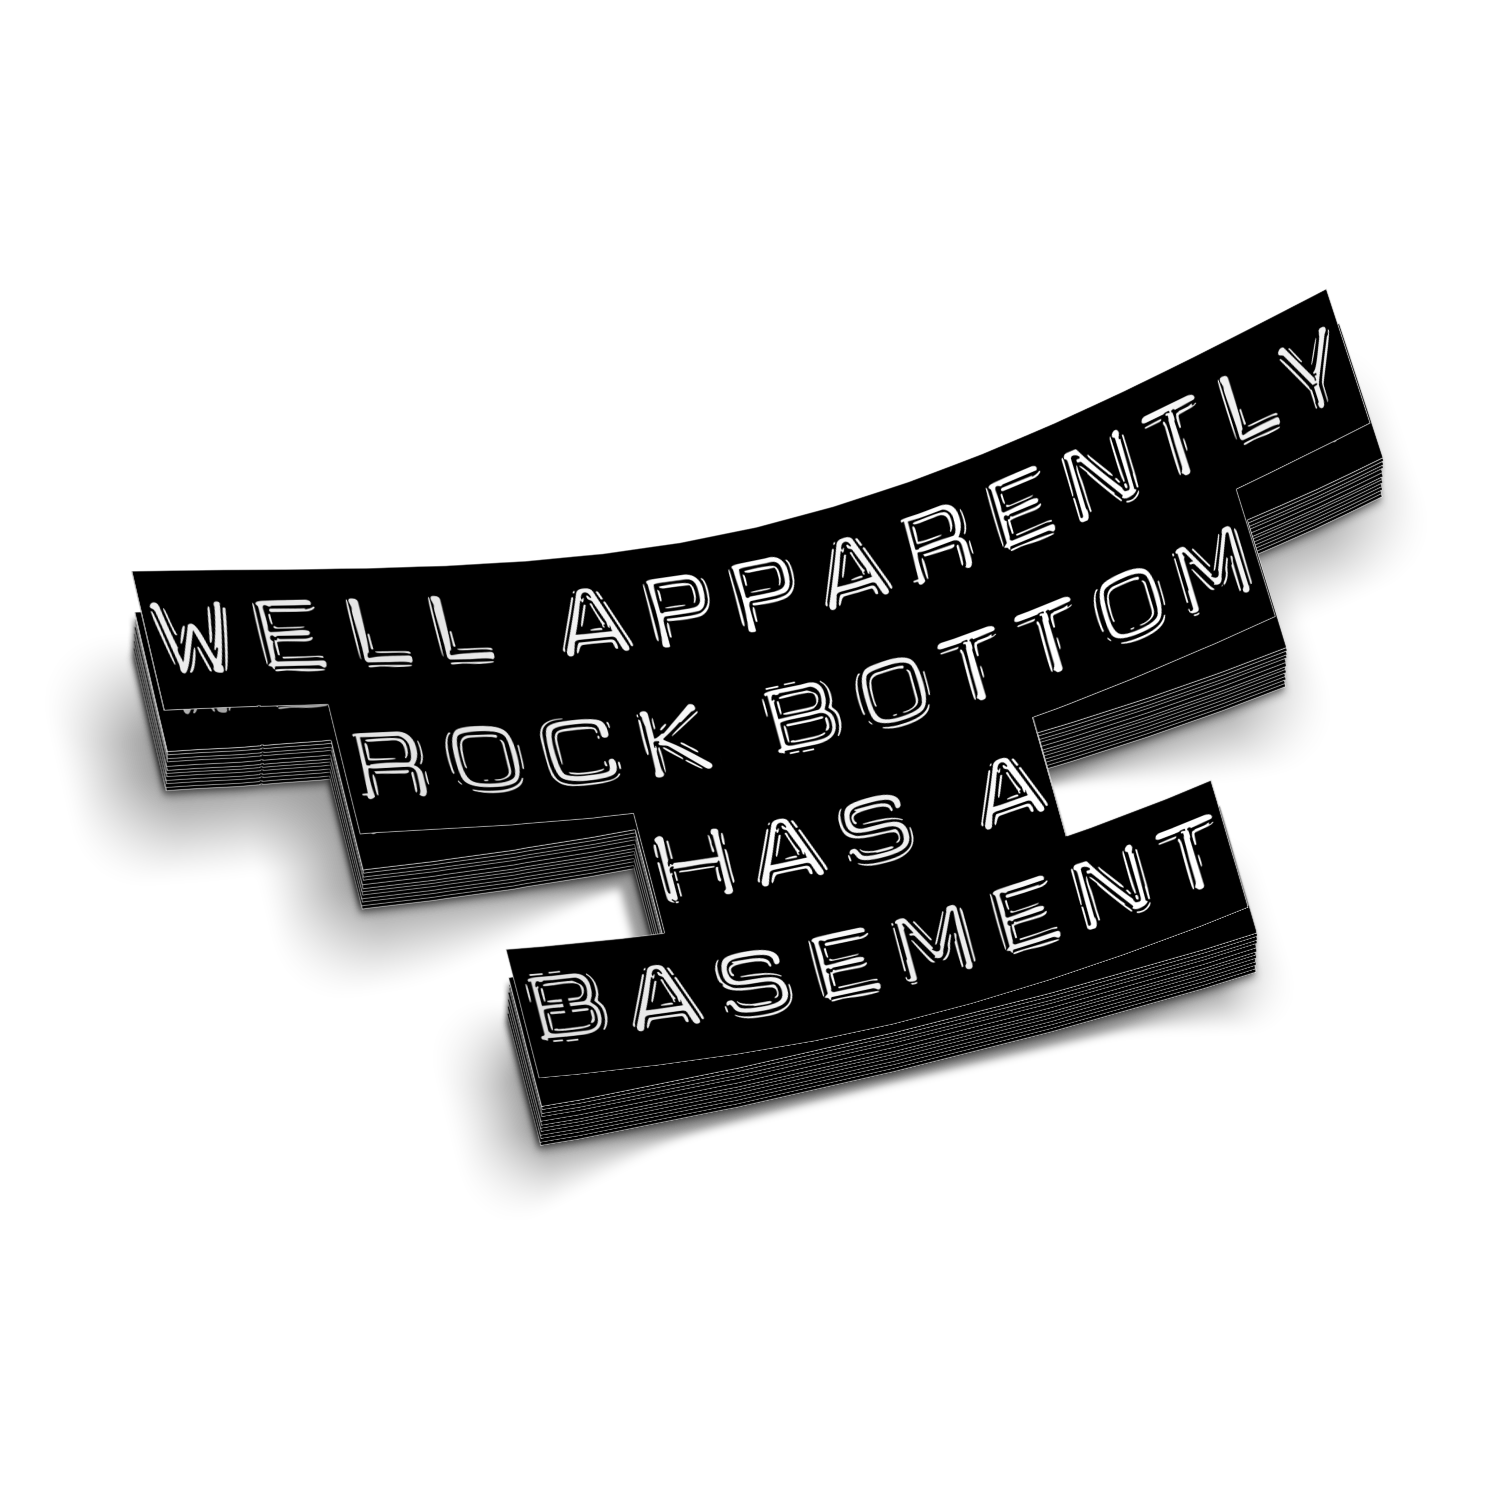 Rock Bottom - Hard Hat Sticker